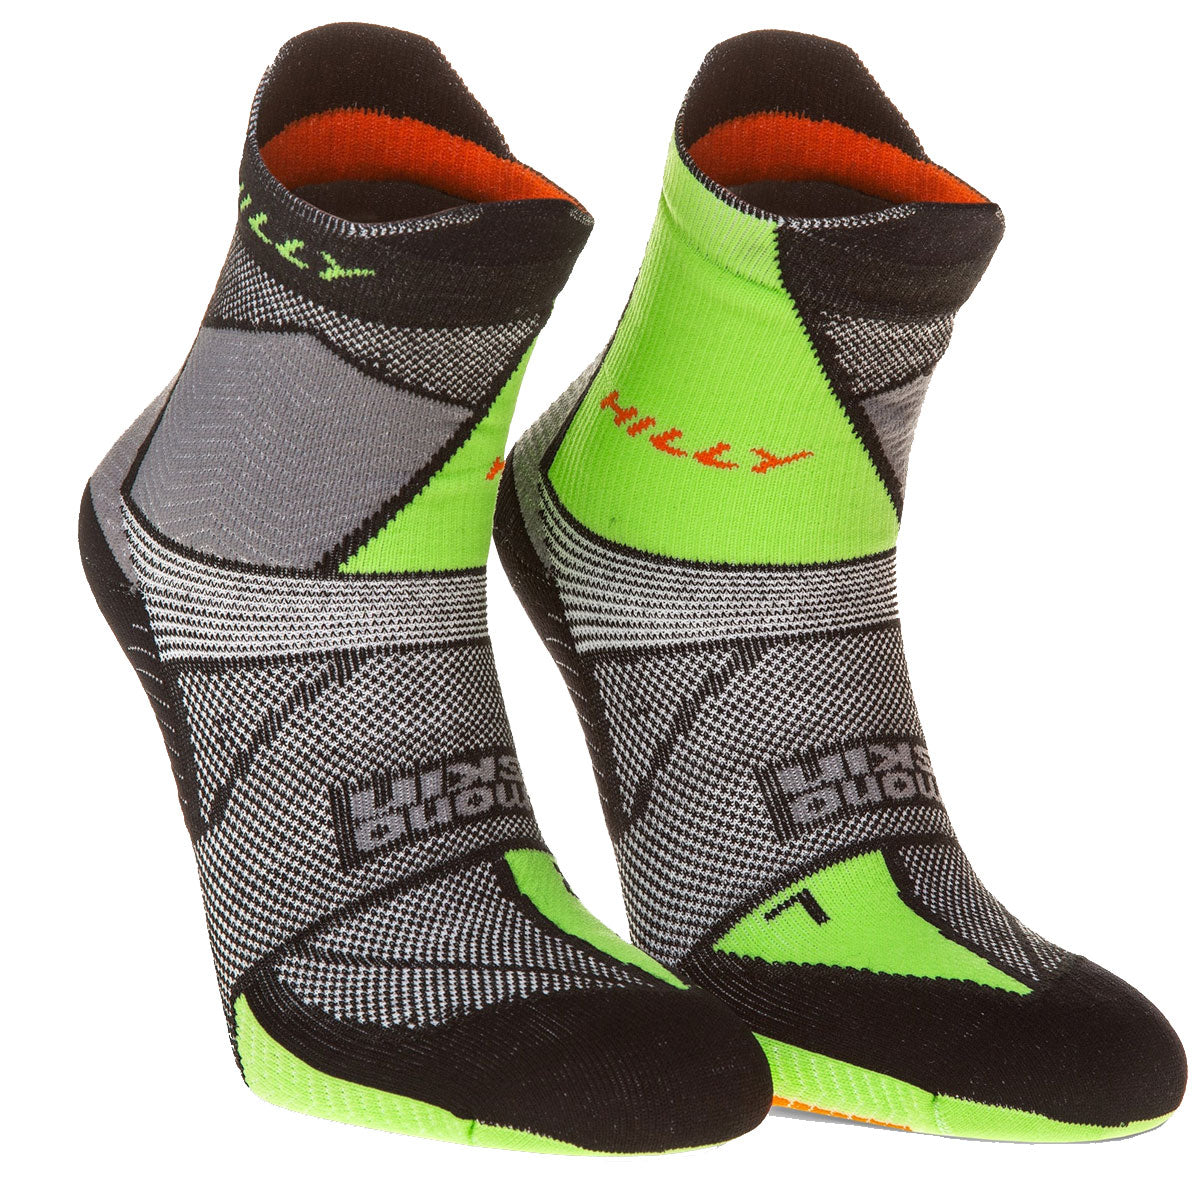 Hilly Marathon Fresh Anklet Med Socks - Mens - Black/Grey/Lime Green